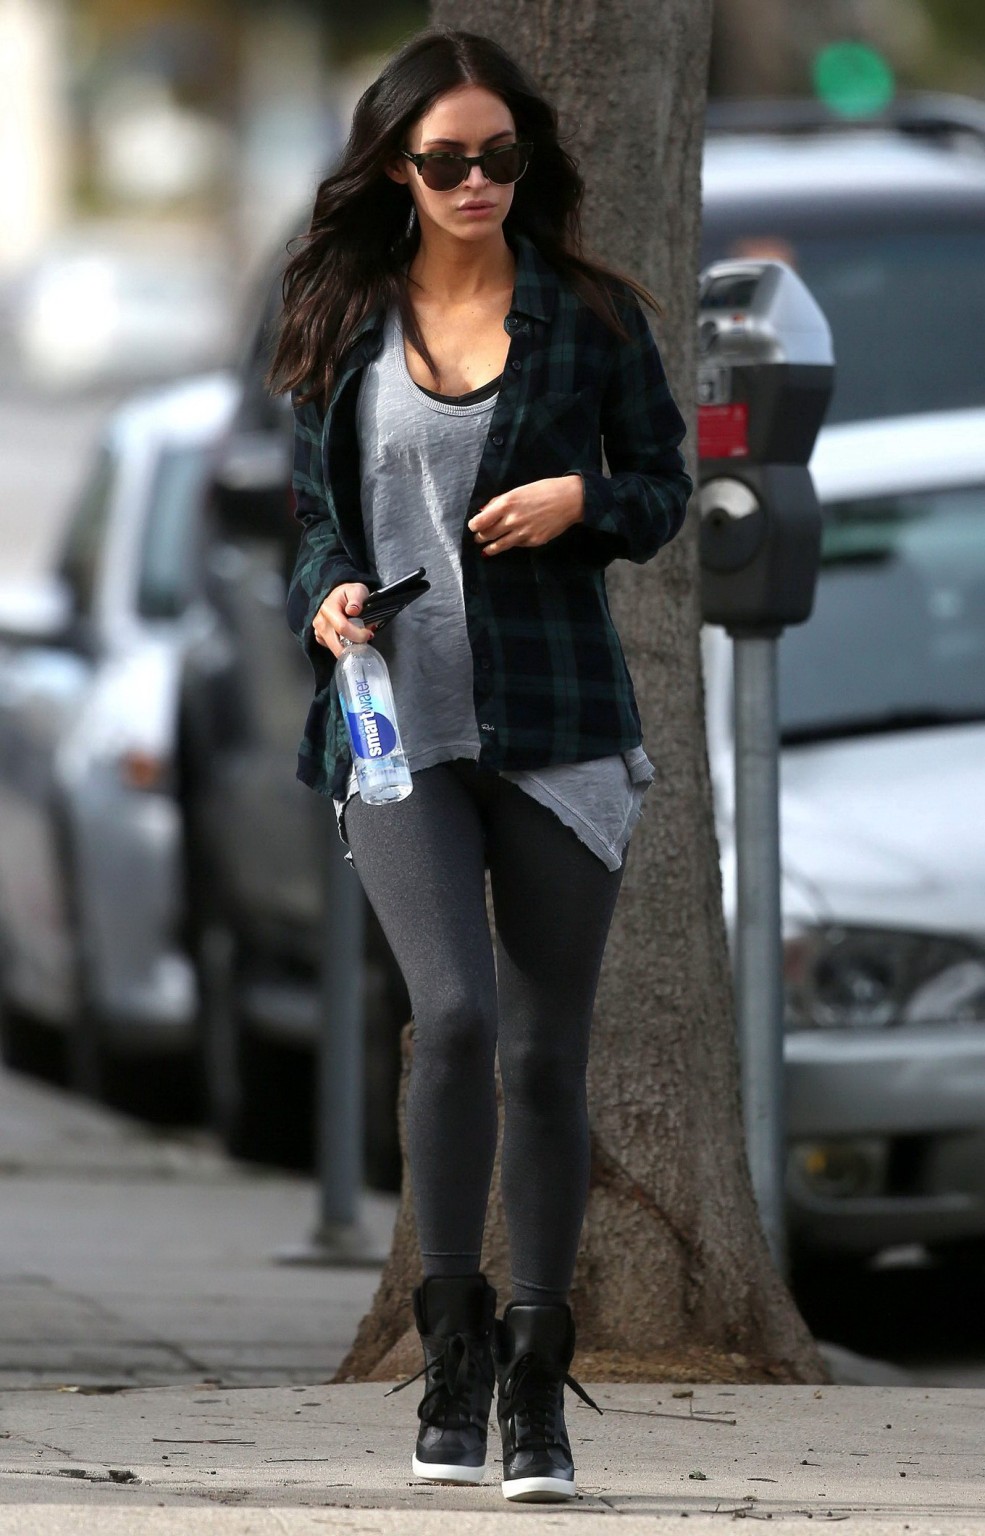 Megan Fox leggy wearing grey tights out in LA